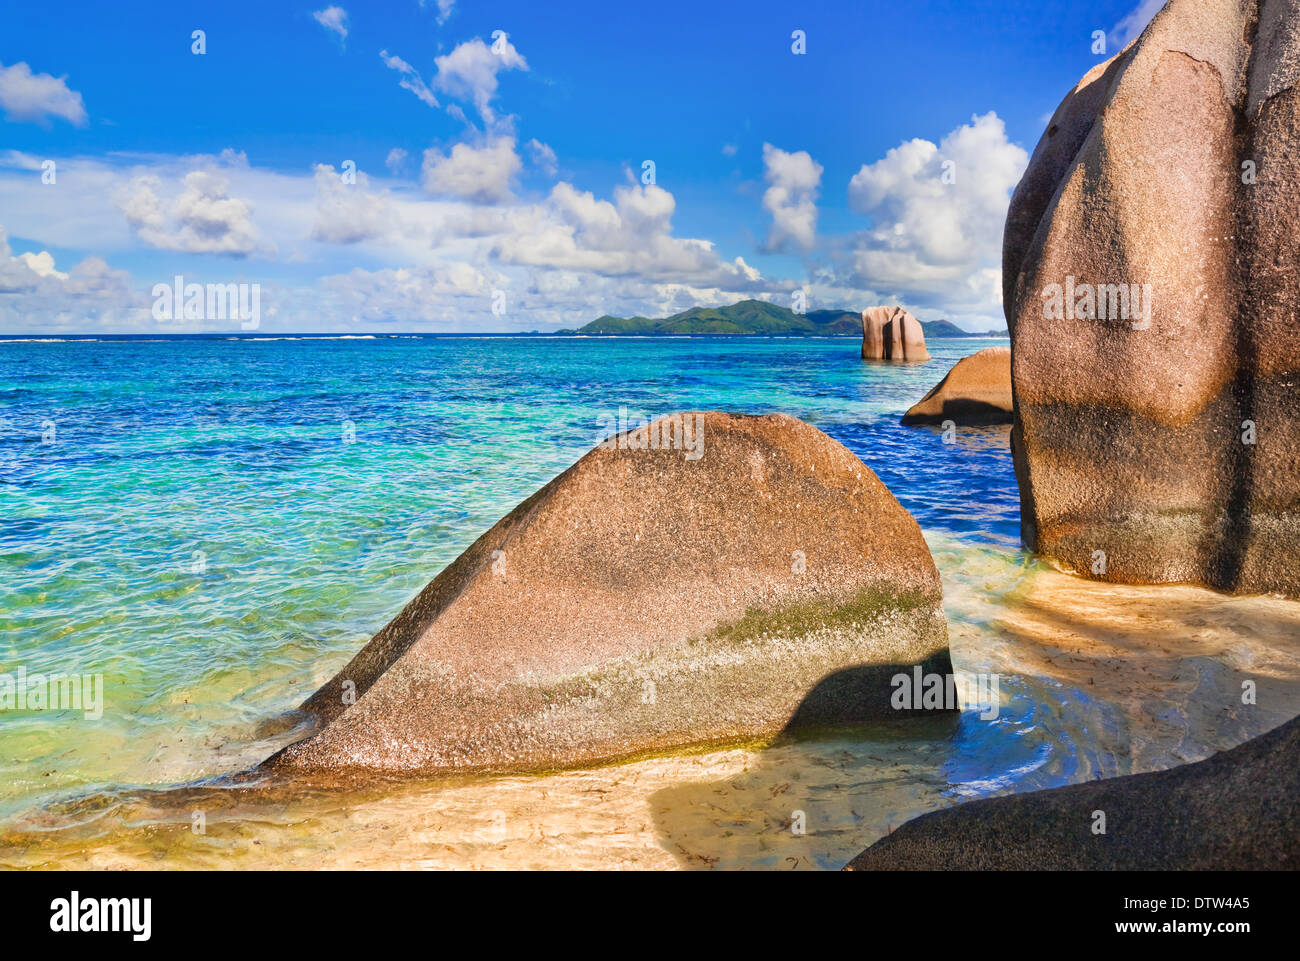 Stones on tropical beach Stock Photo